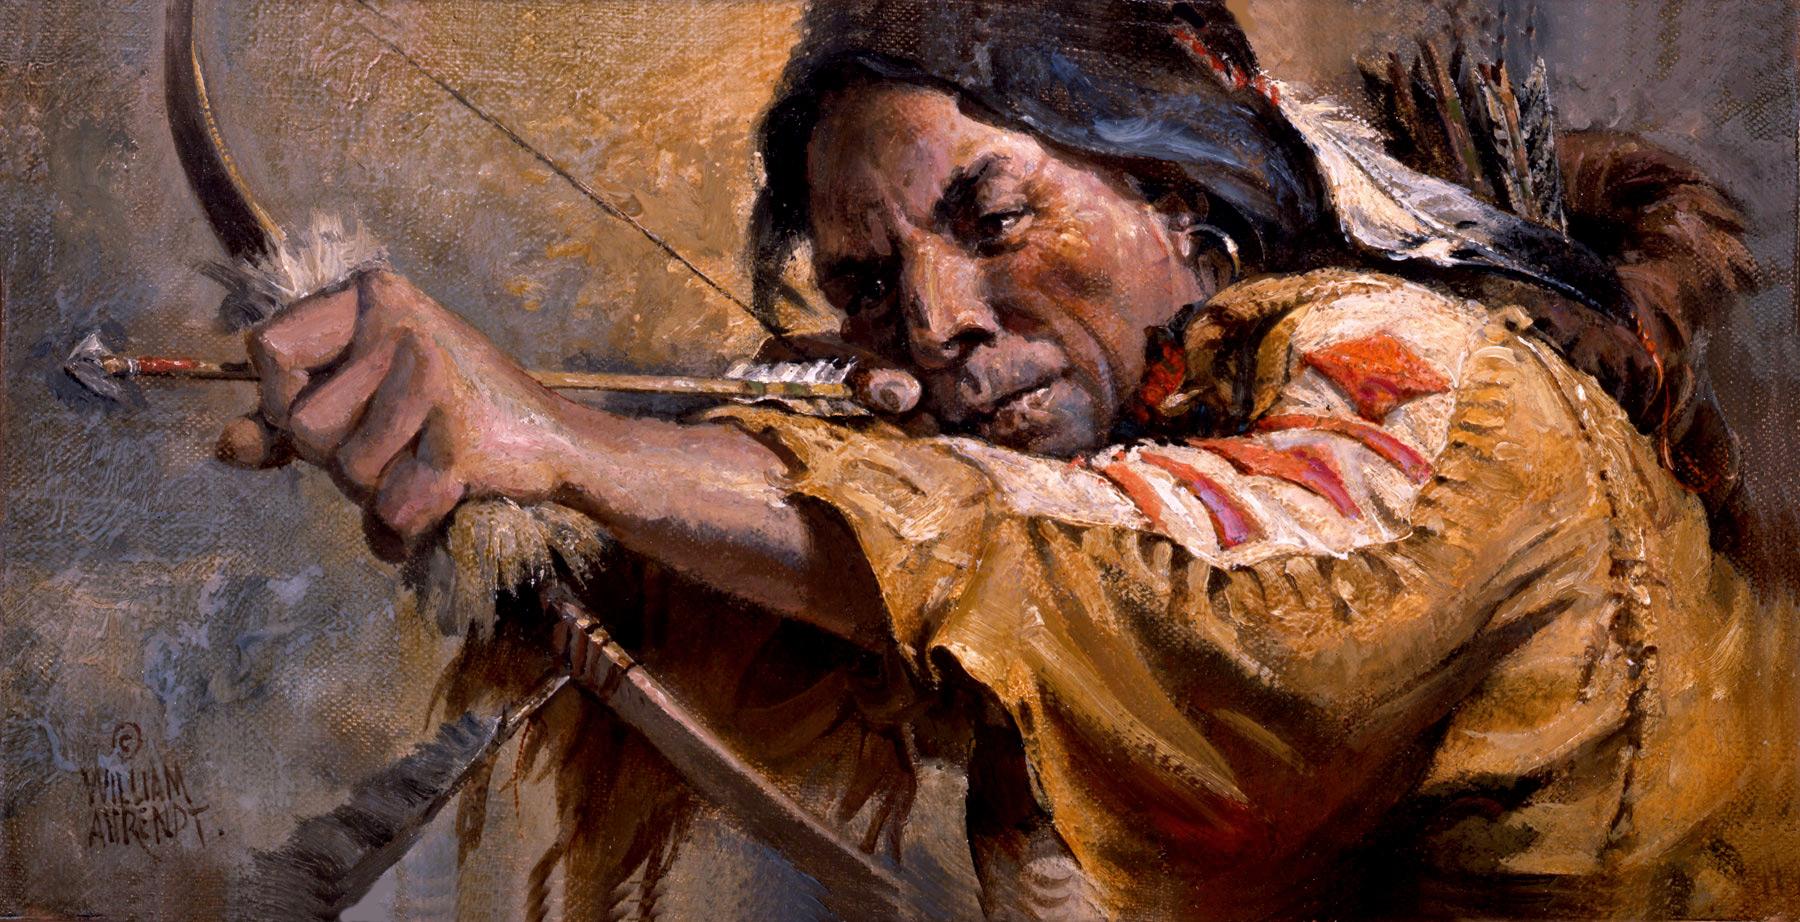 Native American Wallpaper And Screensavers Qiqru Showim